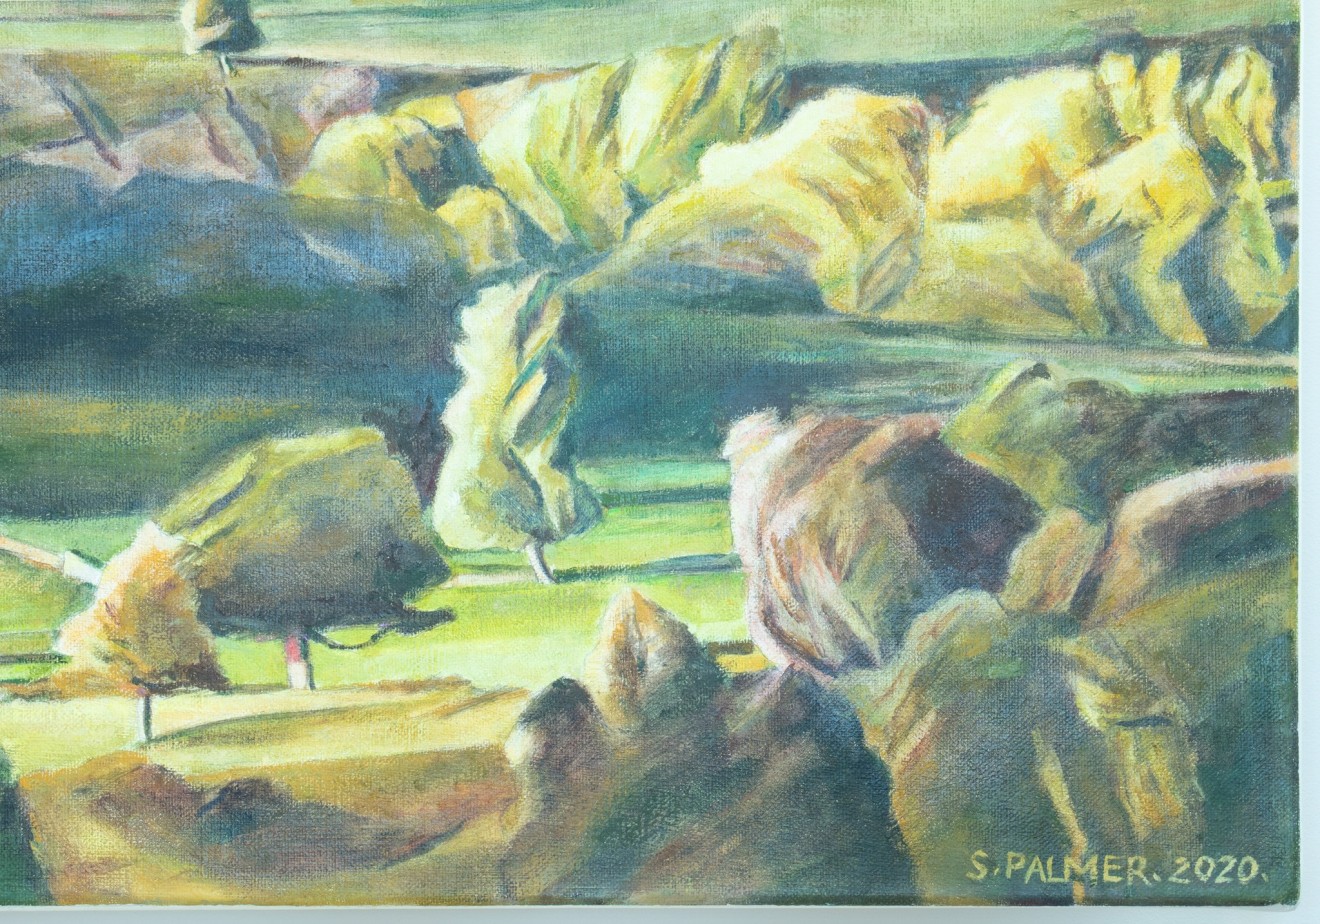 Stanley Palmer, Across Rangitaiki Gorge, 2020